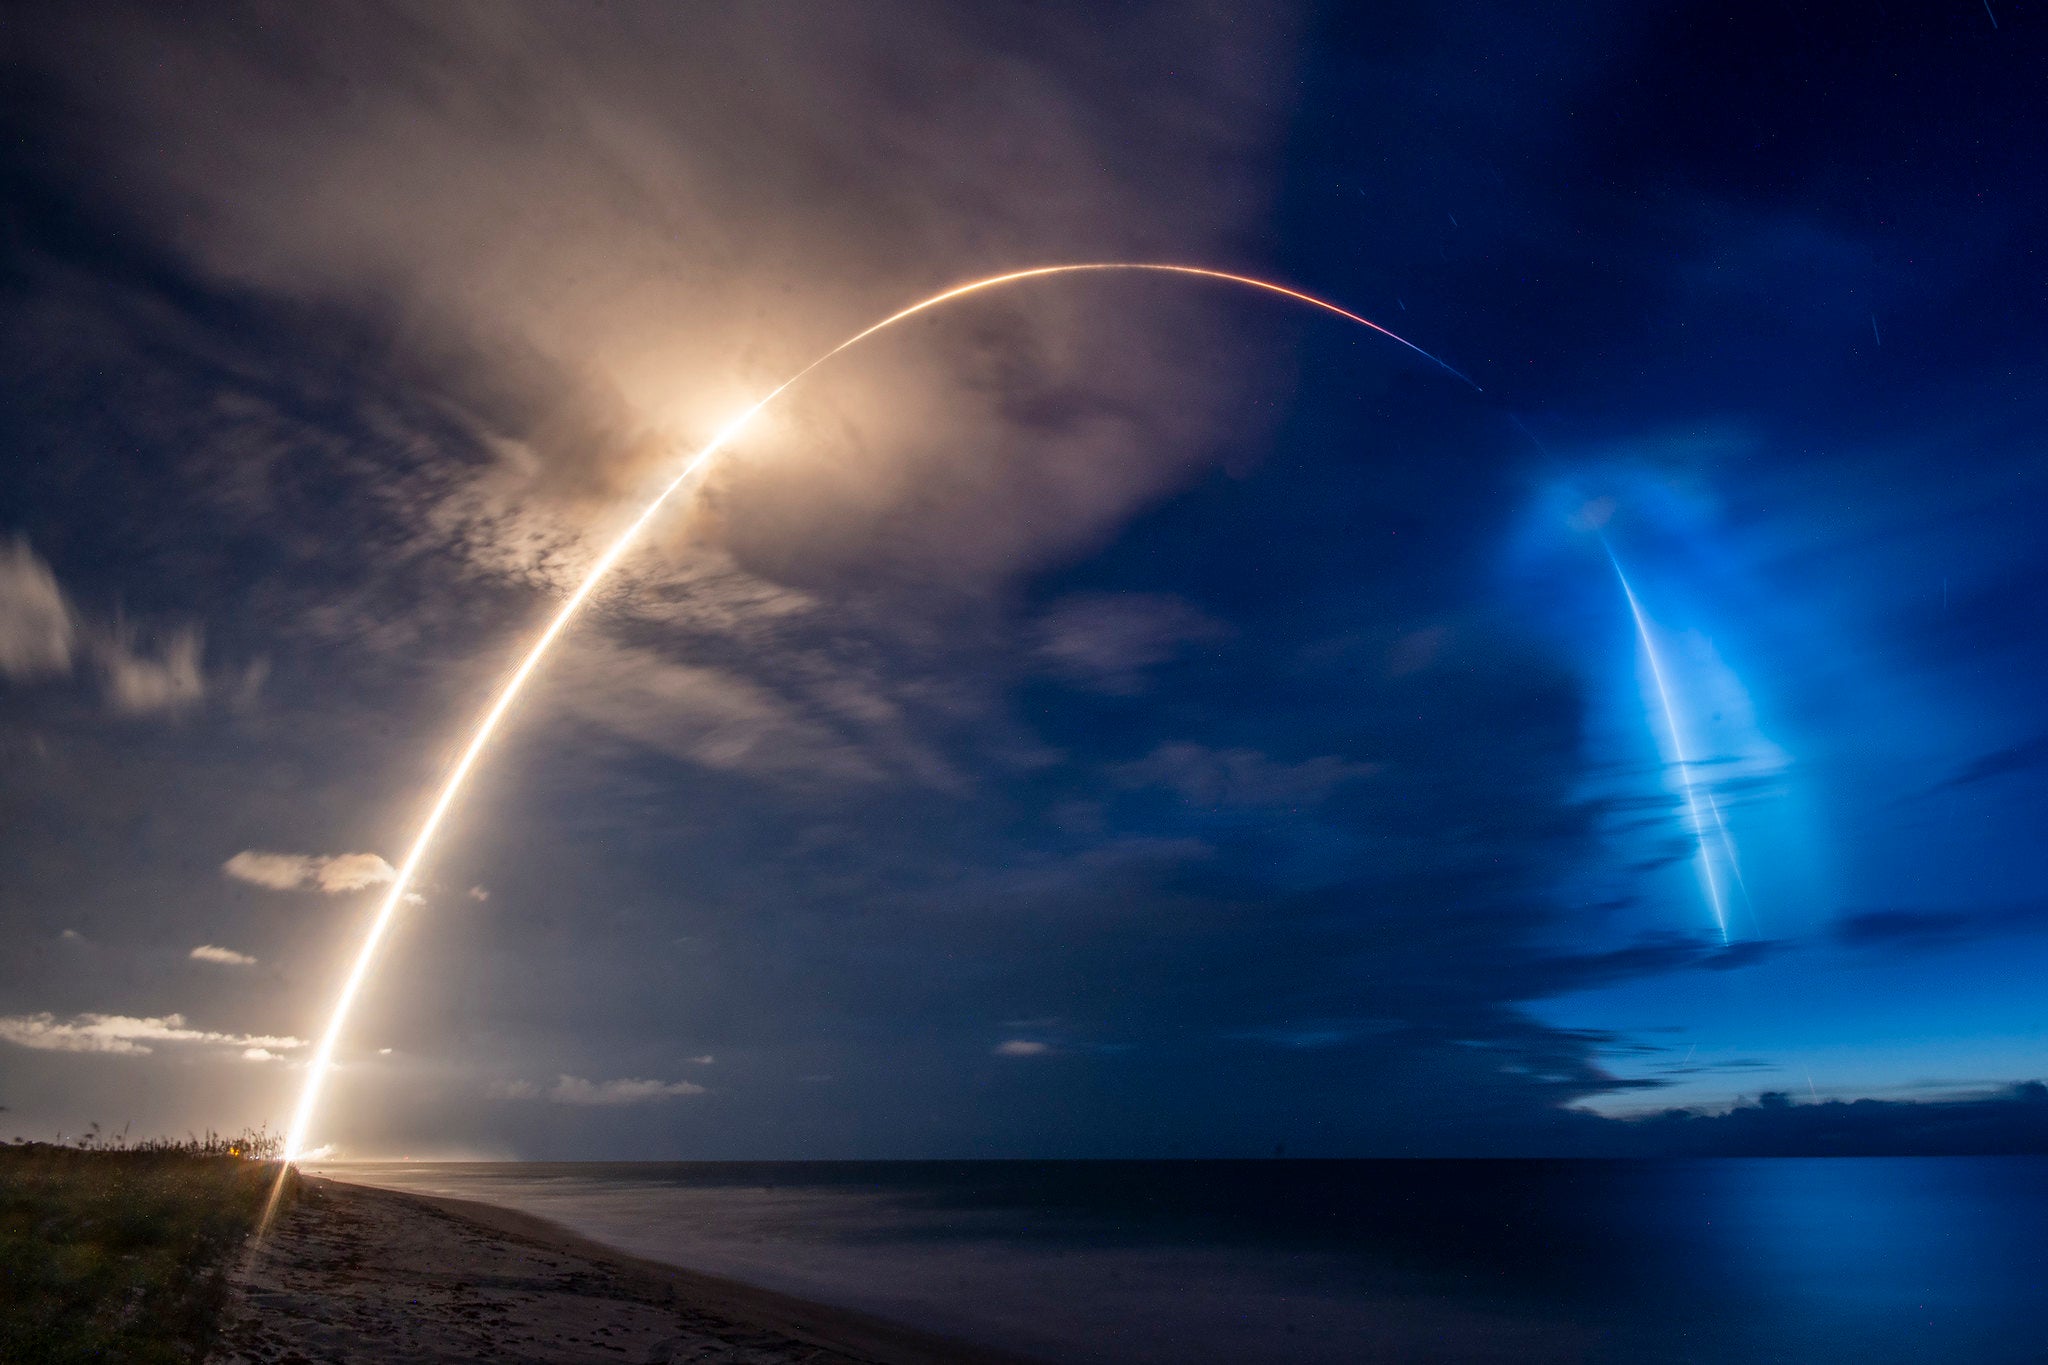 SpaceX is preparing to launch the thirteenth fleet of Starlink satellites